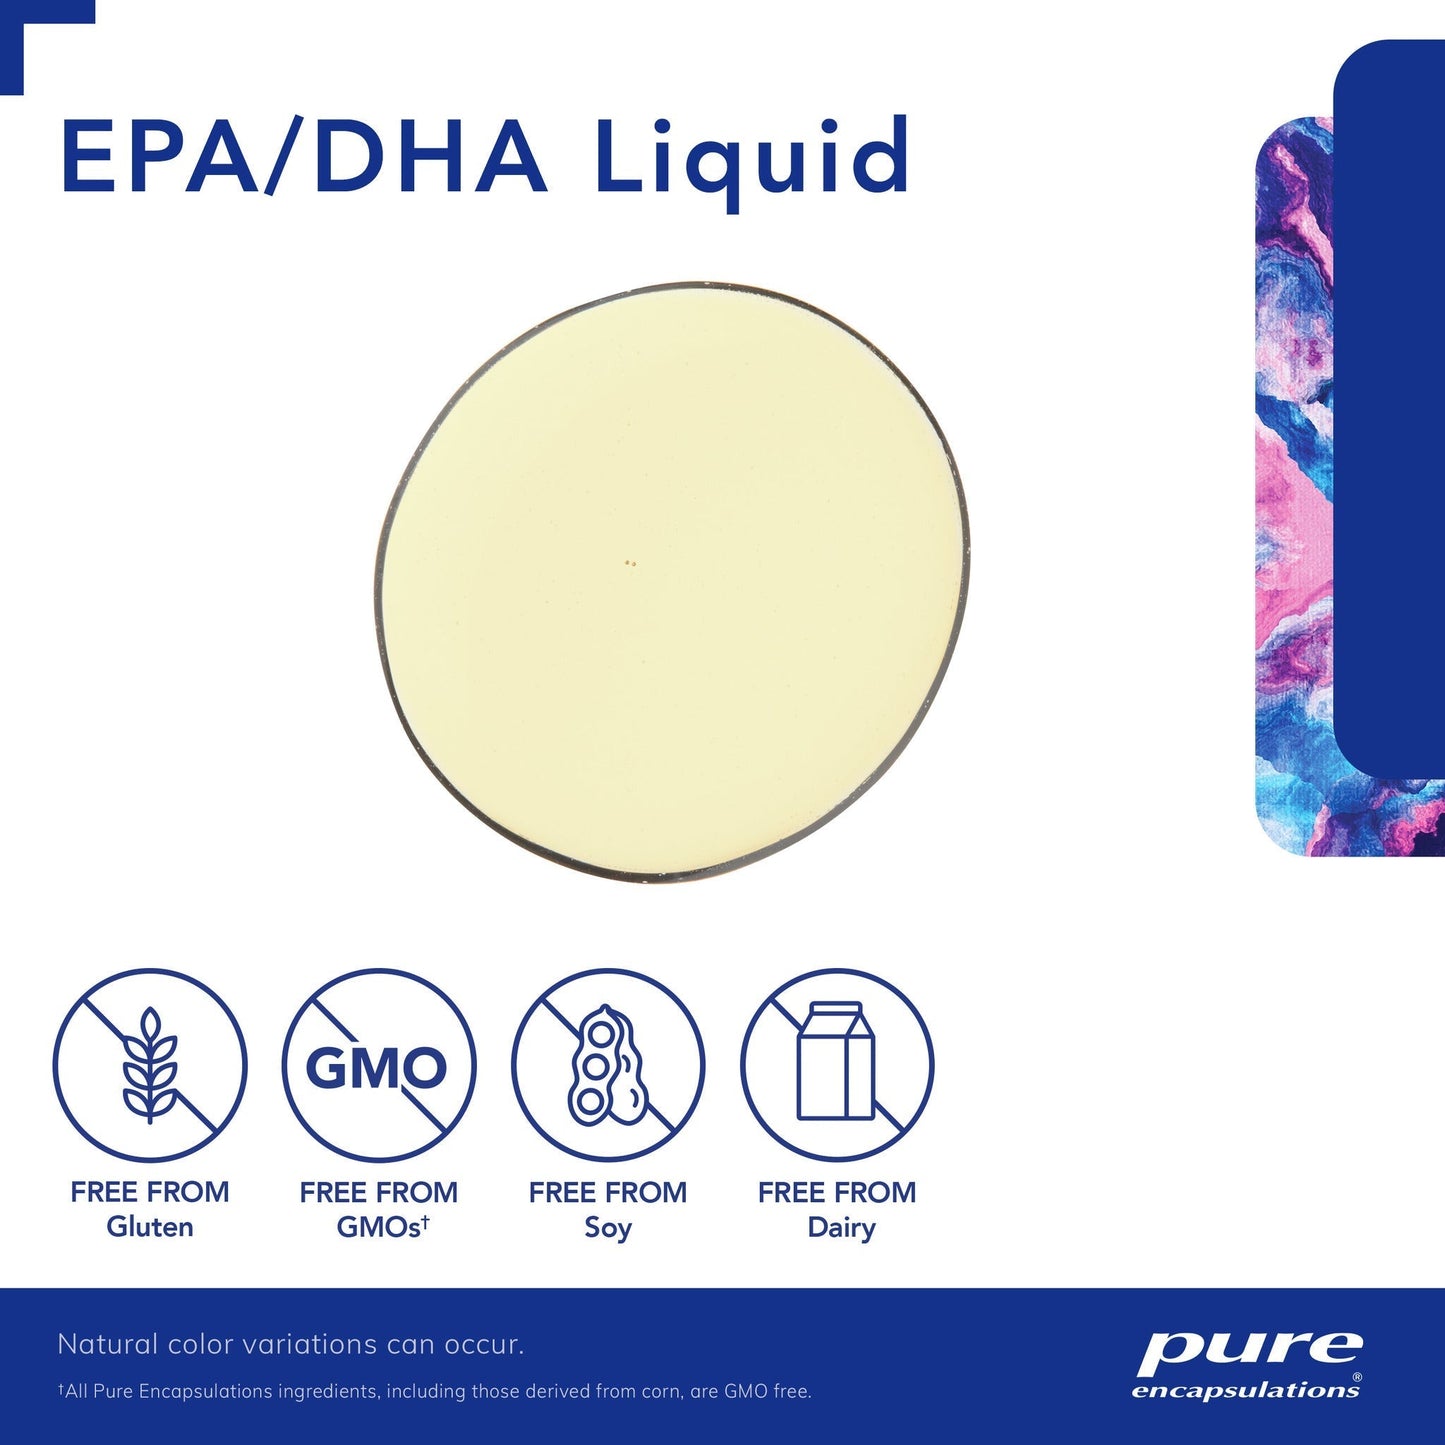 EPA/DHA liquid 200 mL